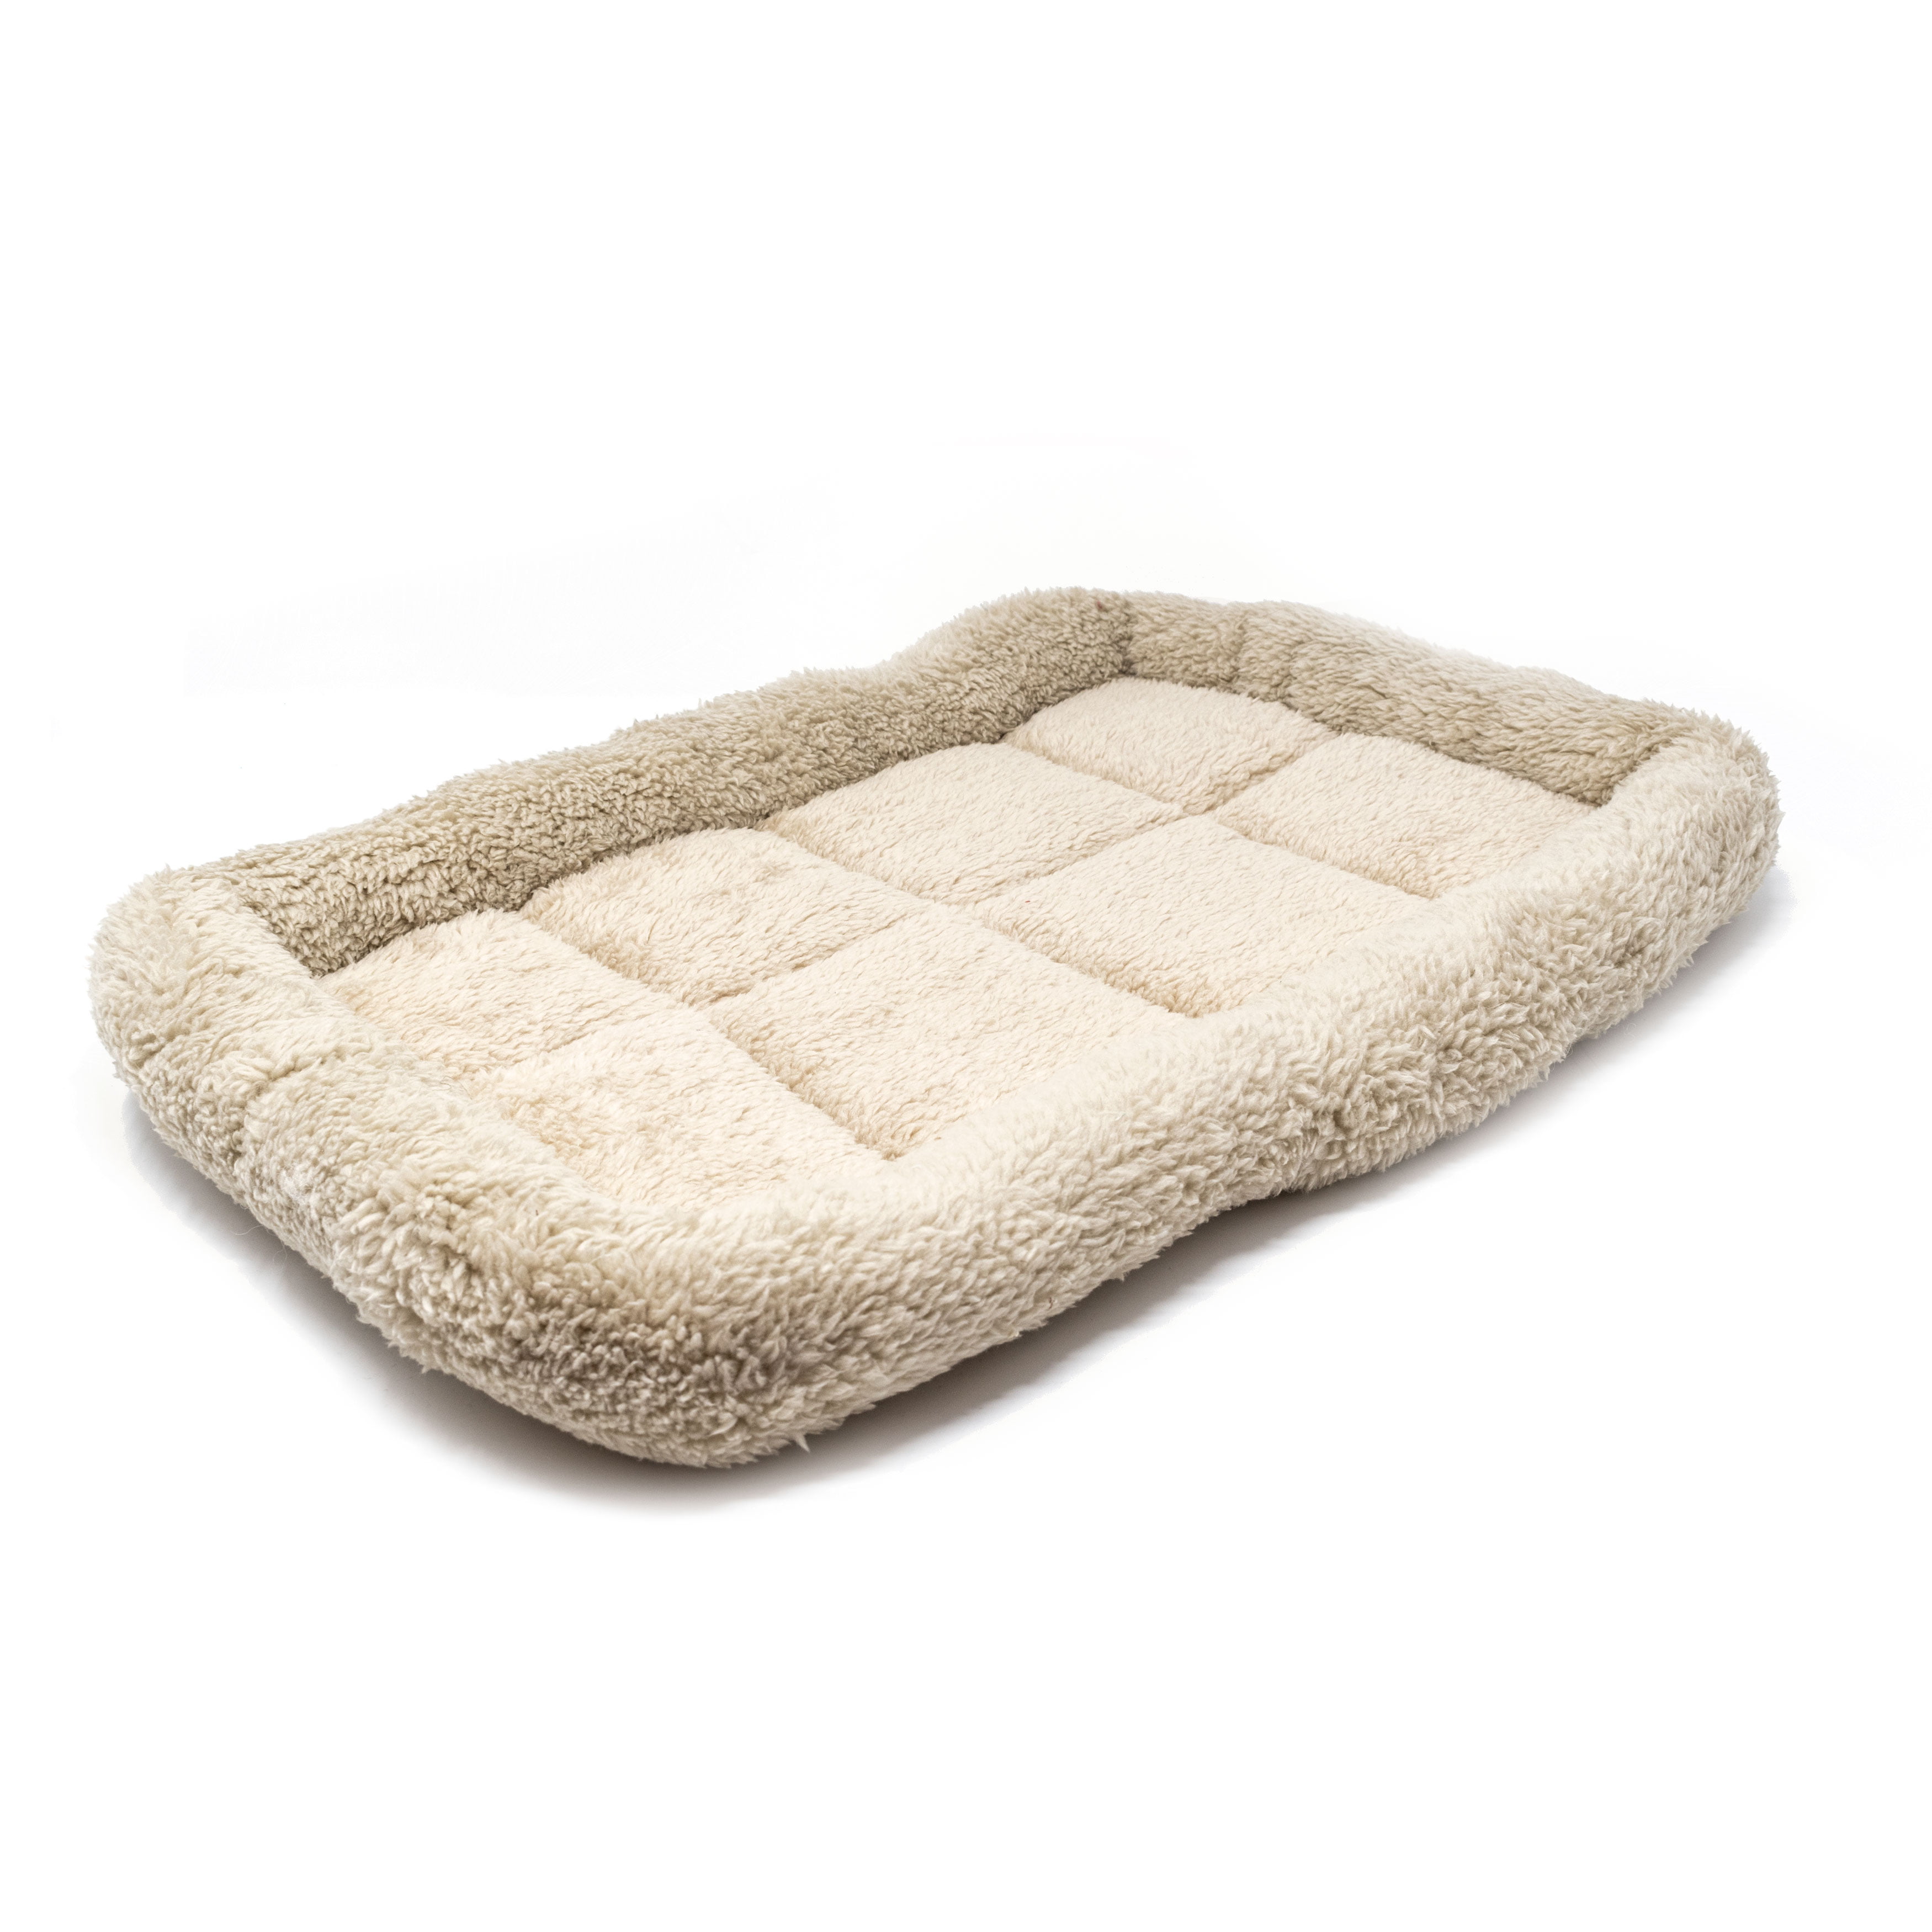 BleuMoo Pet Bed Dog Cat Soft New Warm Pad Cushion Kennel Puppy Cat House Blanket Mat 